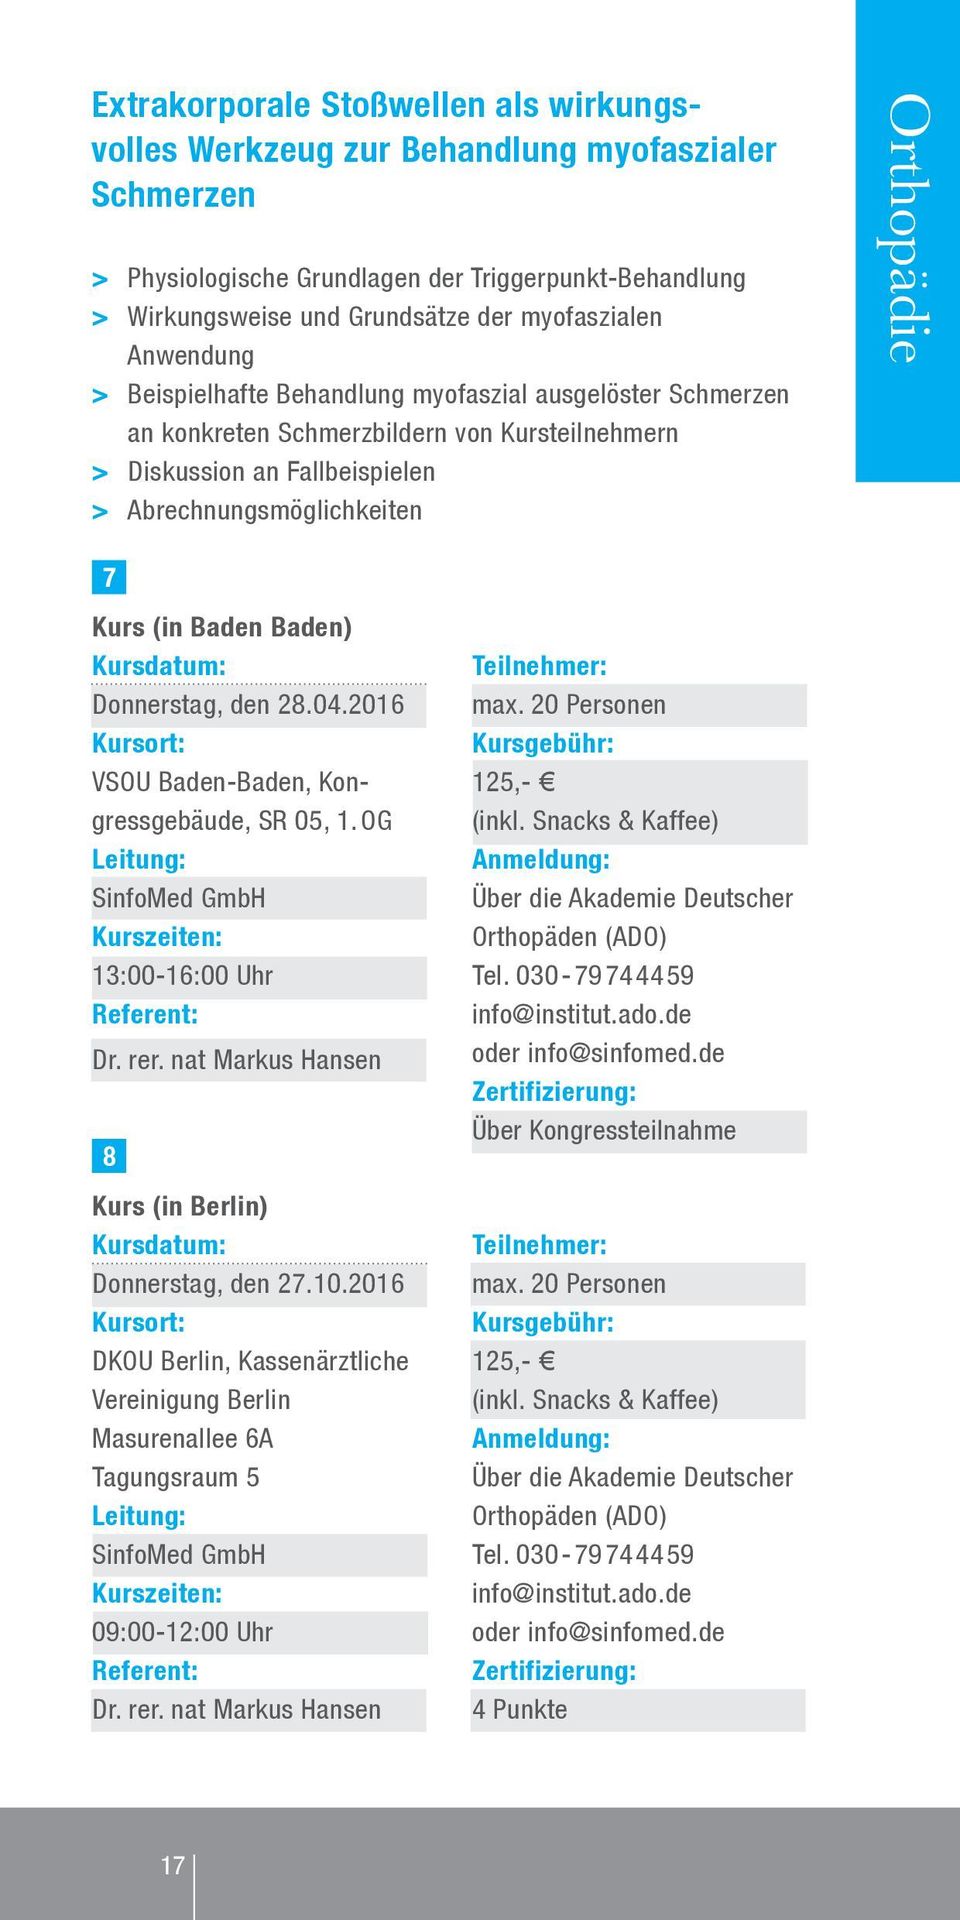 (in Baden Baden) Kursdatum: Donnerstag, den 28.04.2016 Kursort: VSOU Baden-Baden, Kongressgebäude, SR 05, 1.OG Leitung: Kurszeiten: 13:00-16:00 Uhr Referent: Dr. rer.